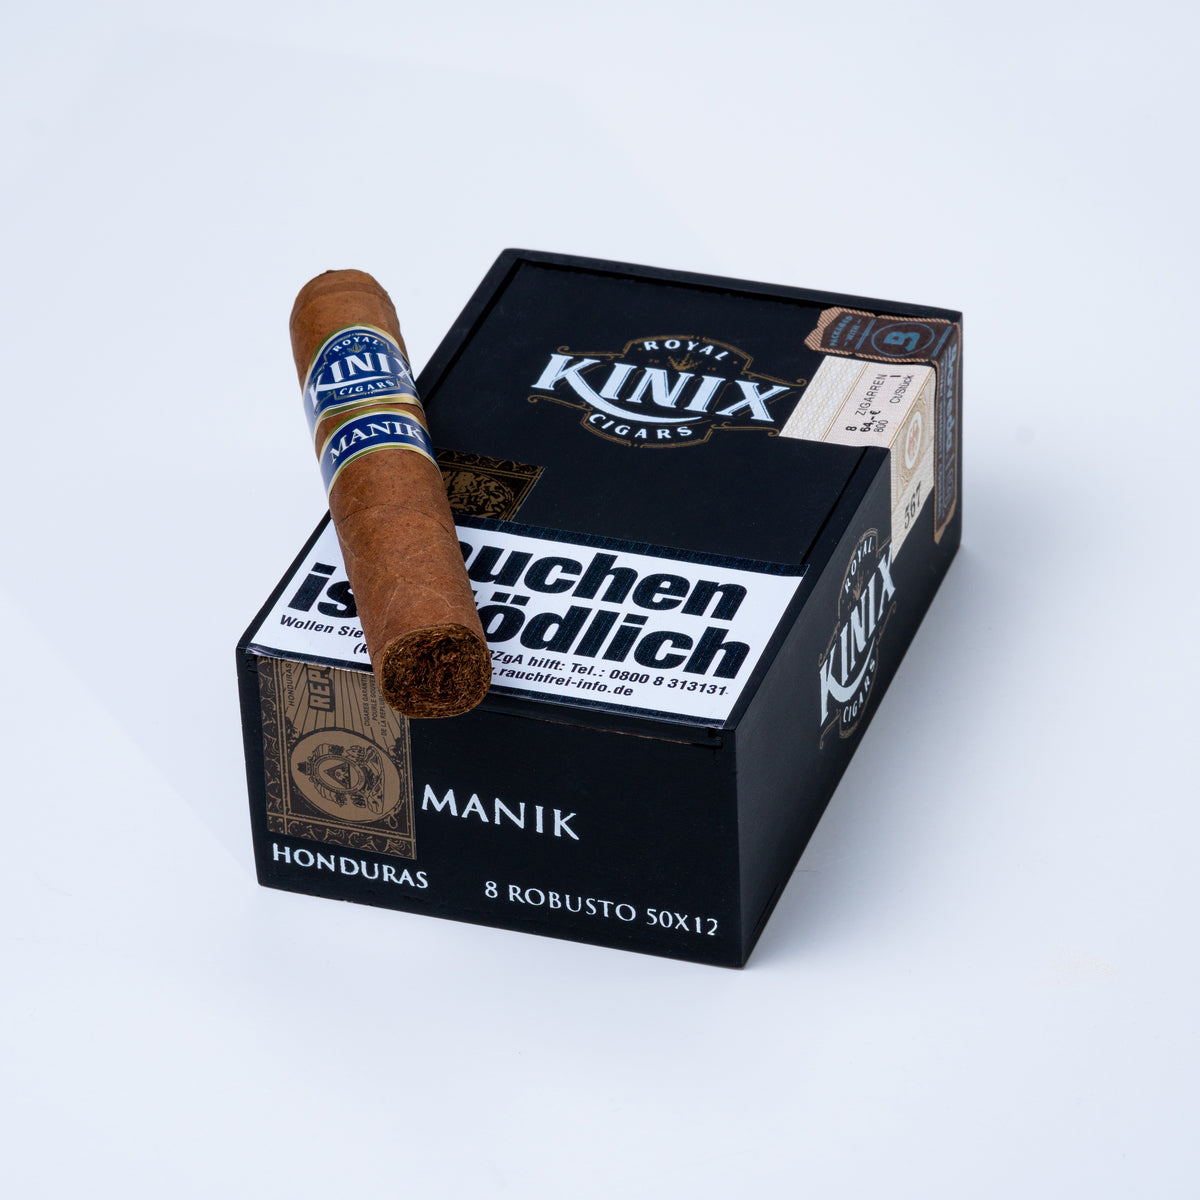 MANIK (8er Kiste) – P. Santos Cigars UG